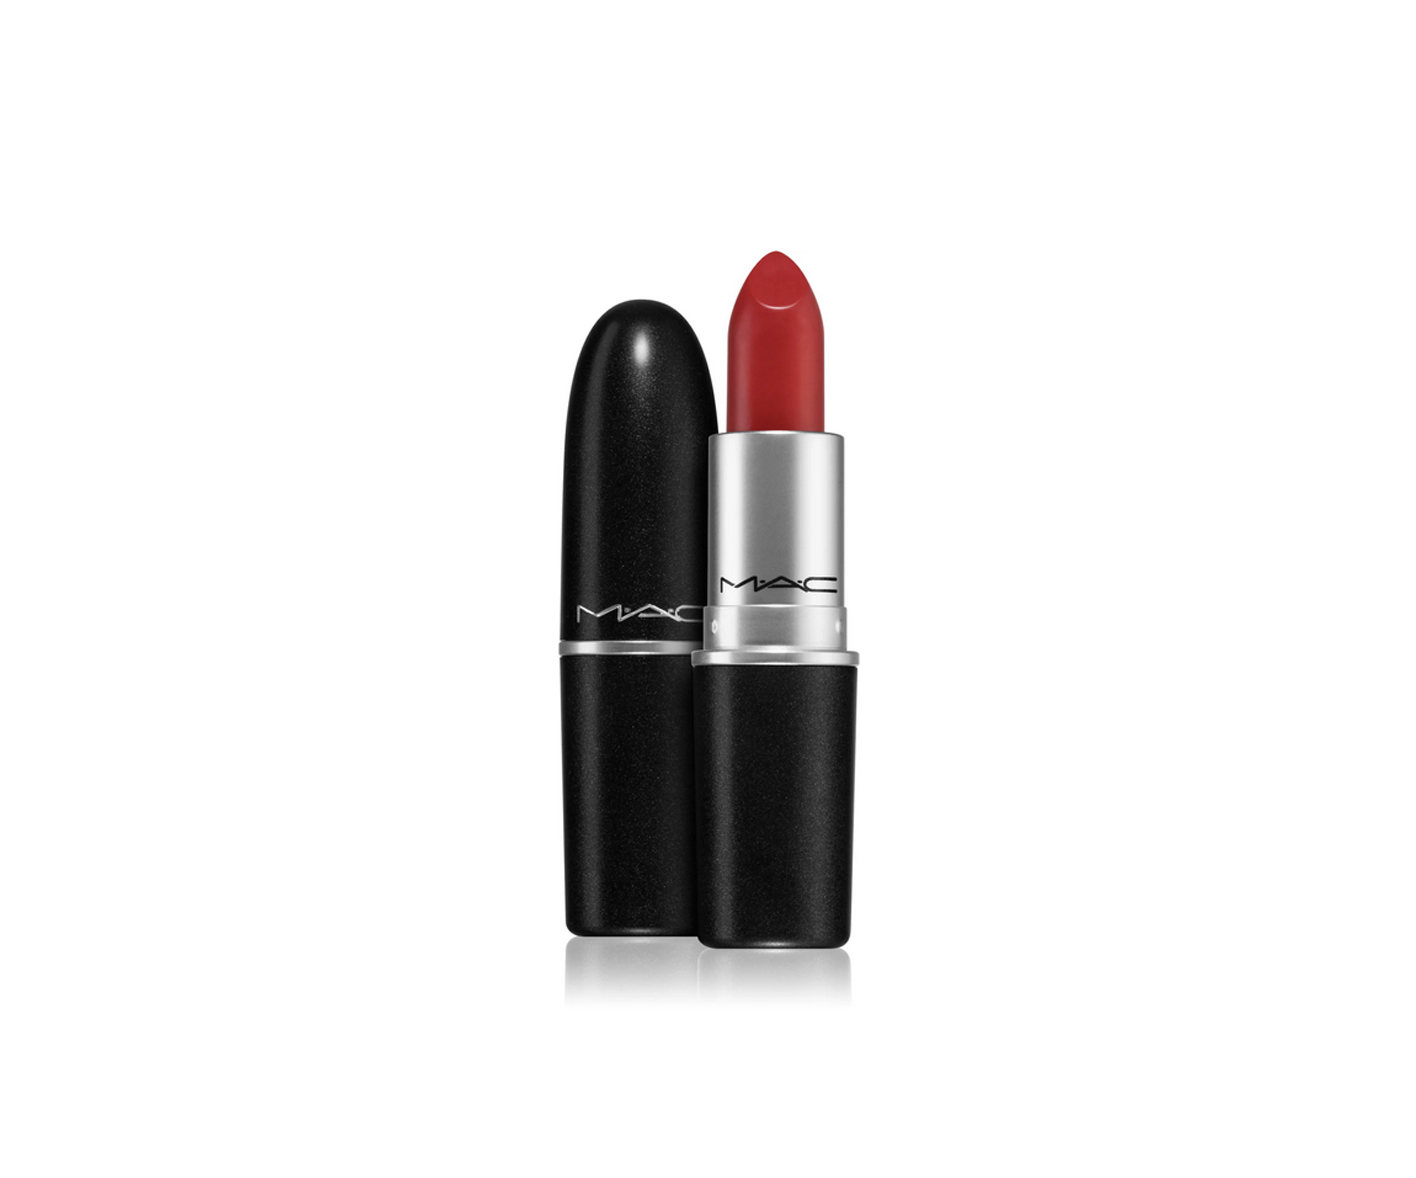  MAC Cosmetics, Retro Matte Lipstick, czerwona szminka